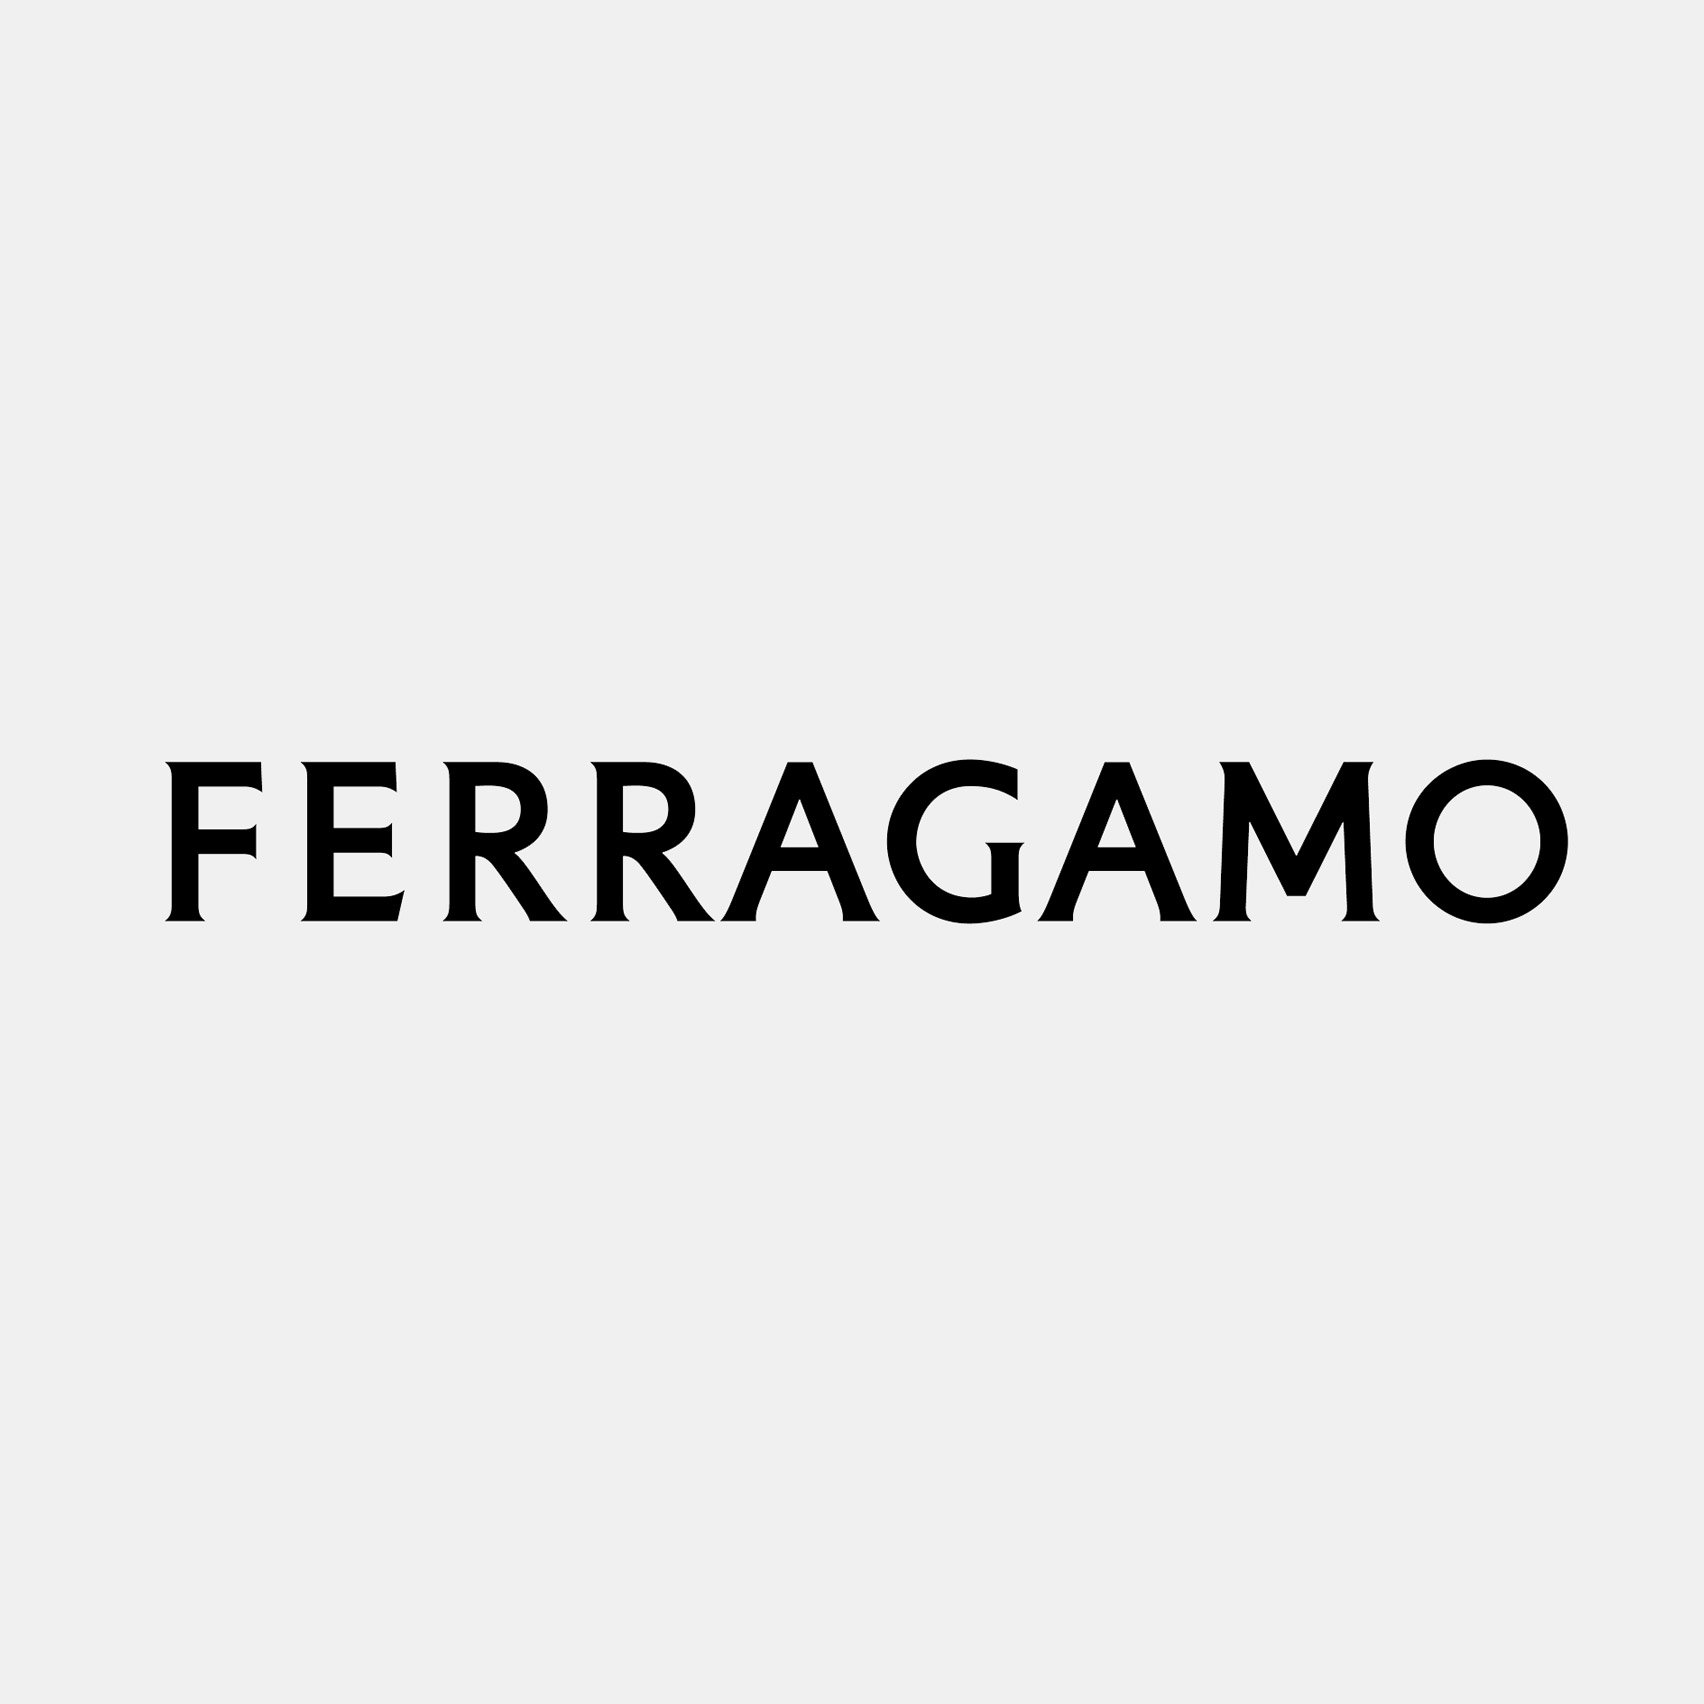 Ferragamo logo in black capital letters